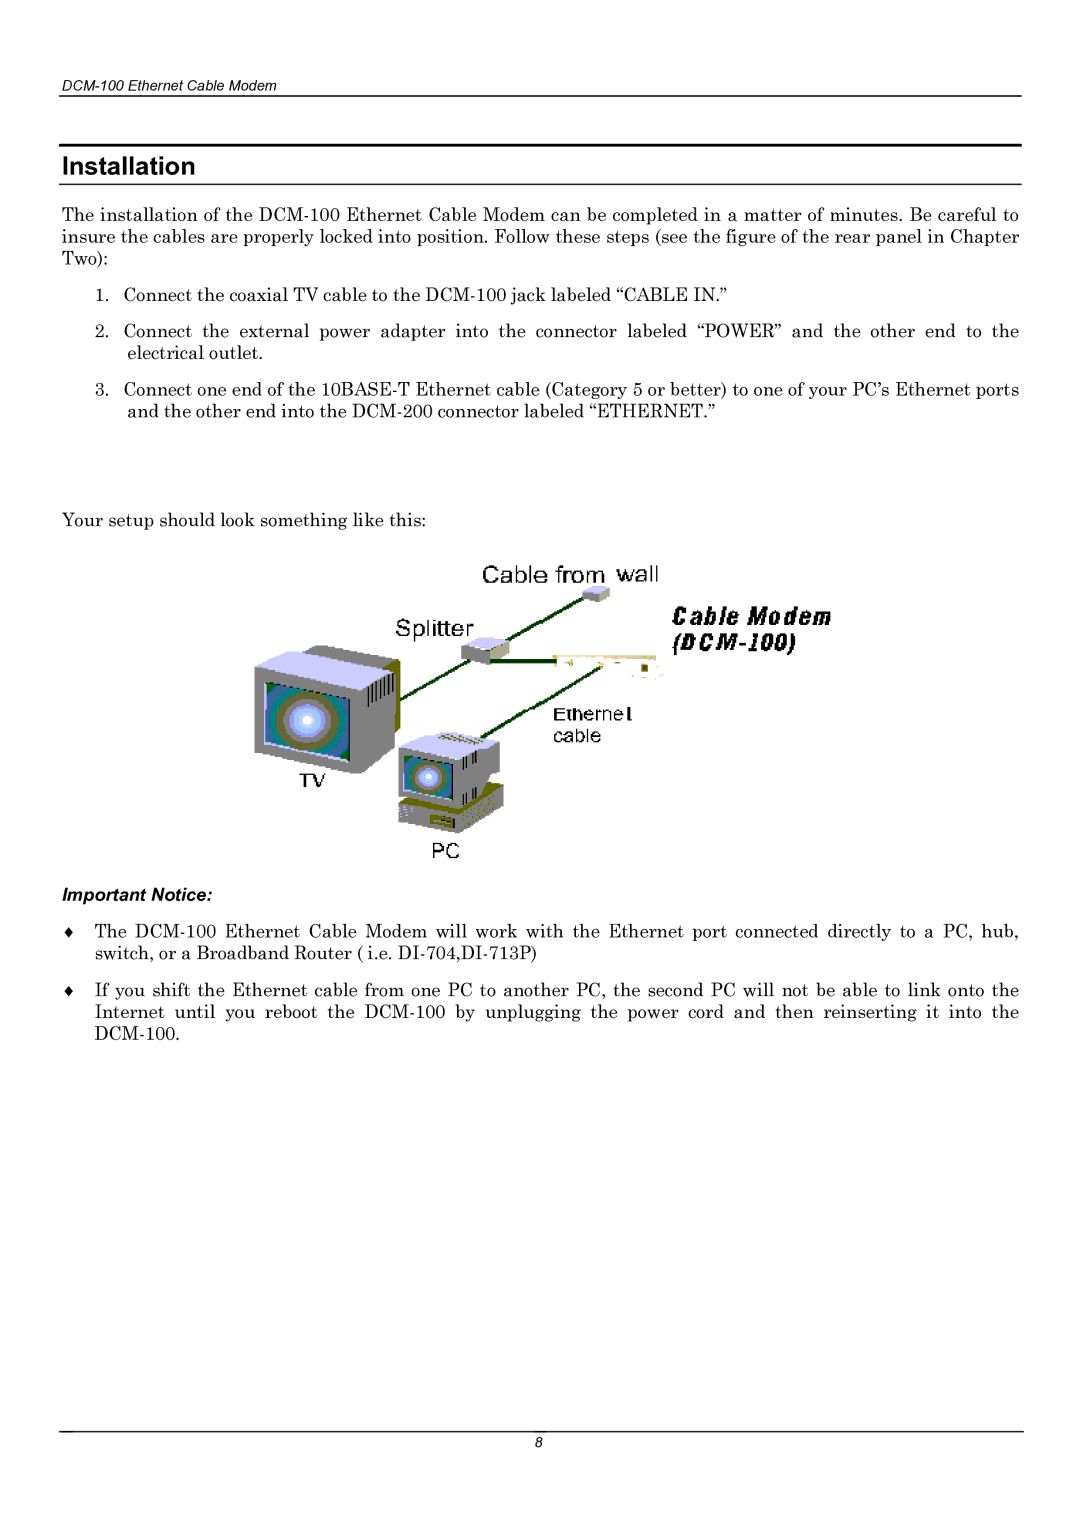 D-Link DCM-100 user manual Installation, Important Notice 